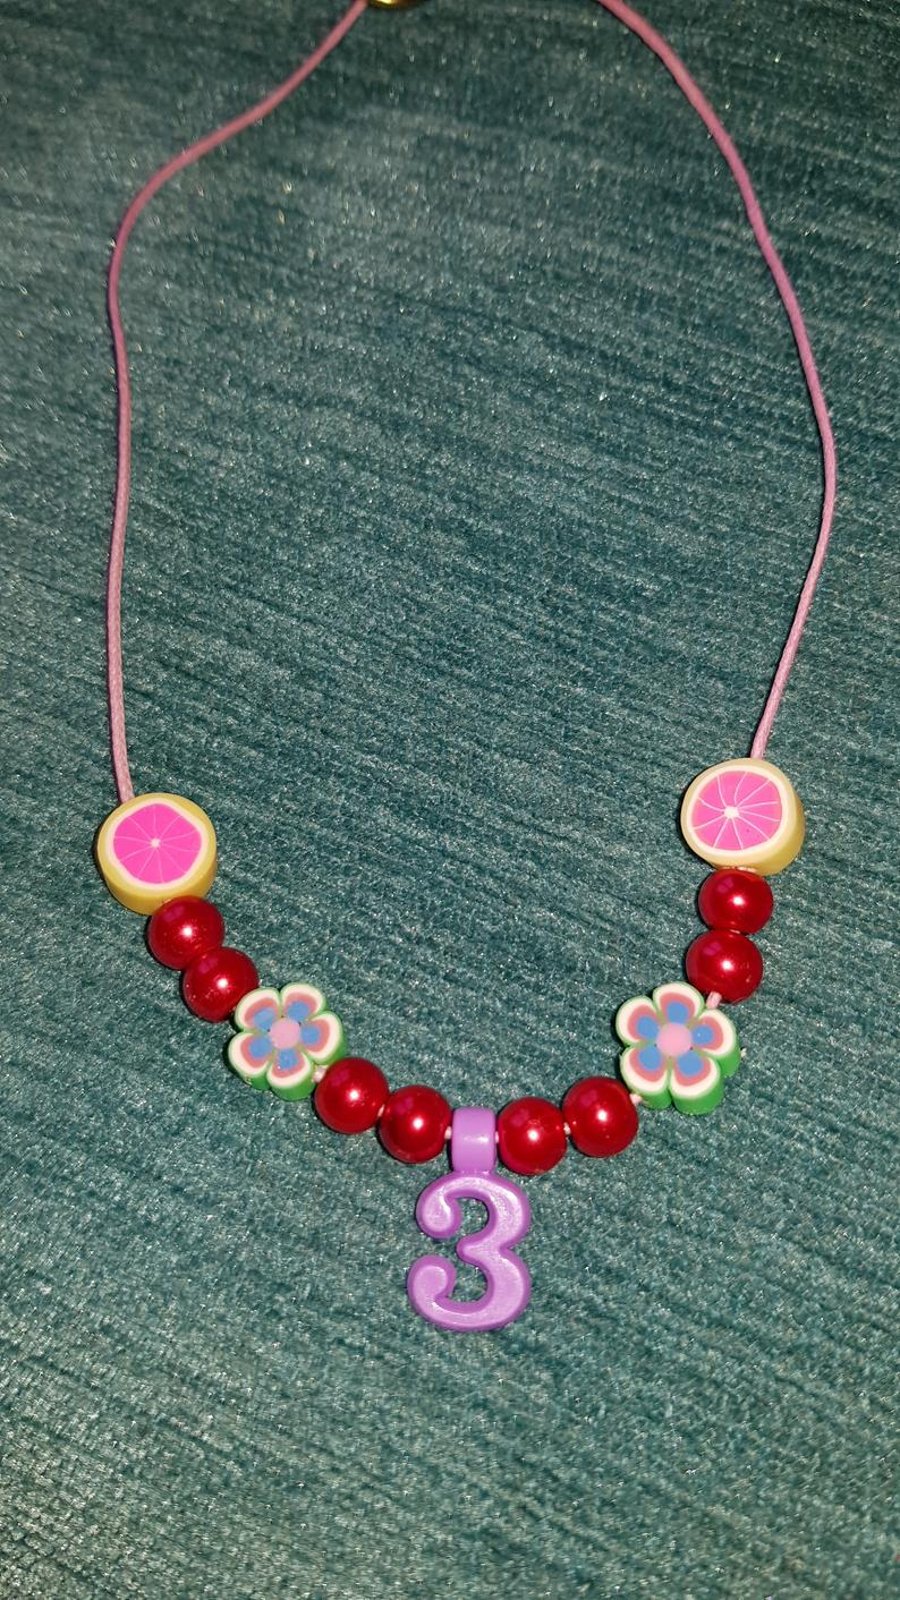 Children's '3' Charm Necklace